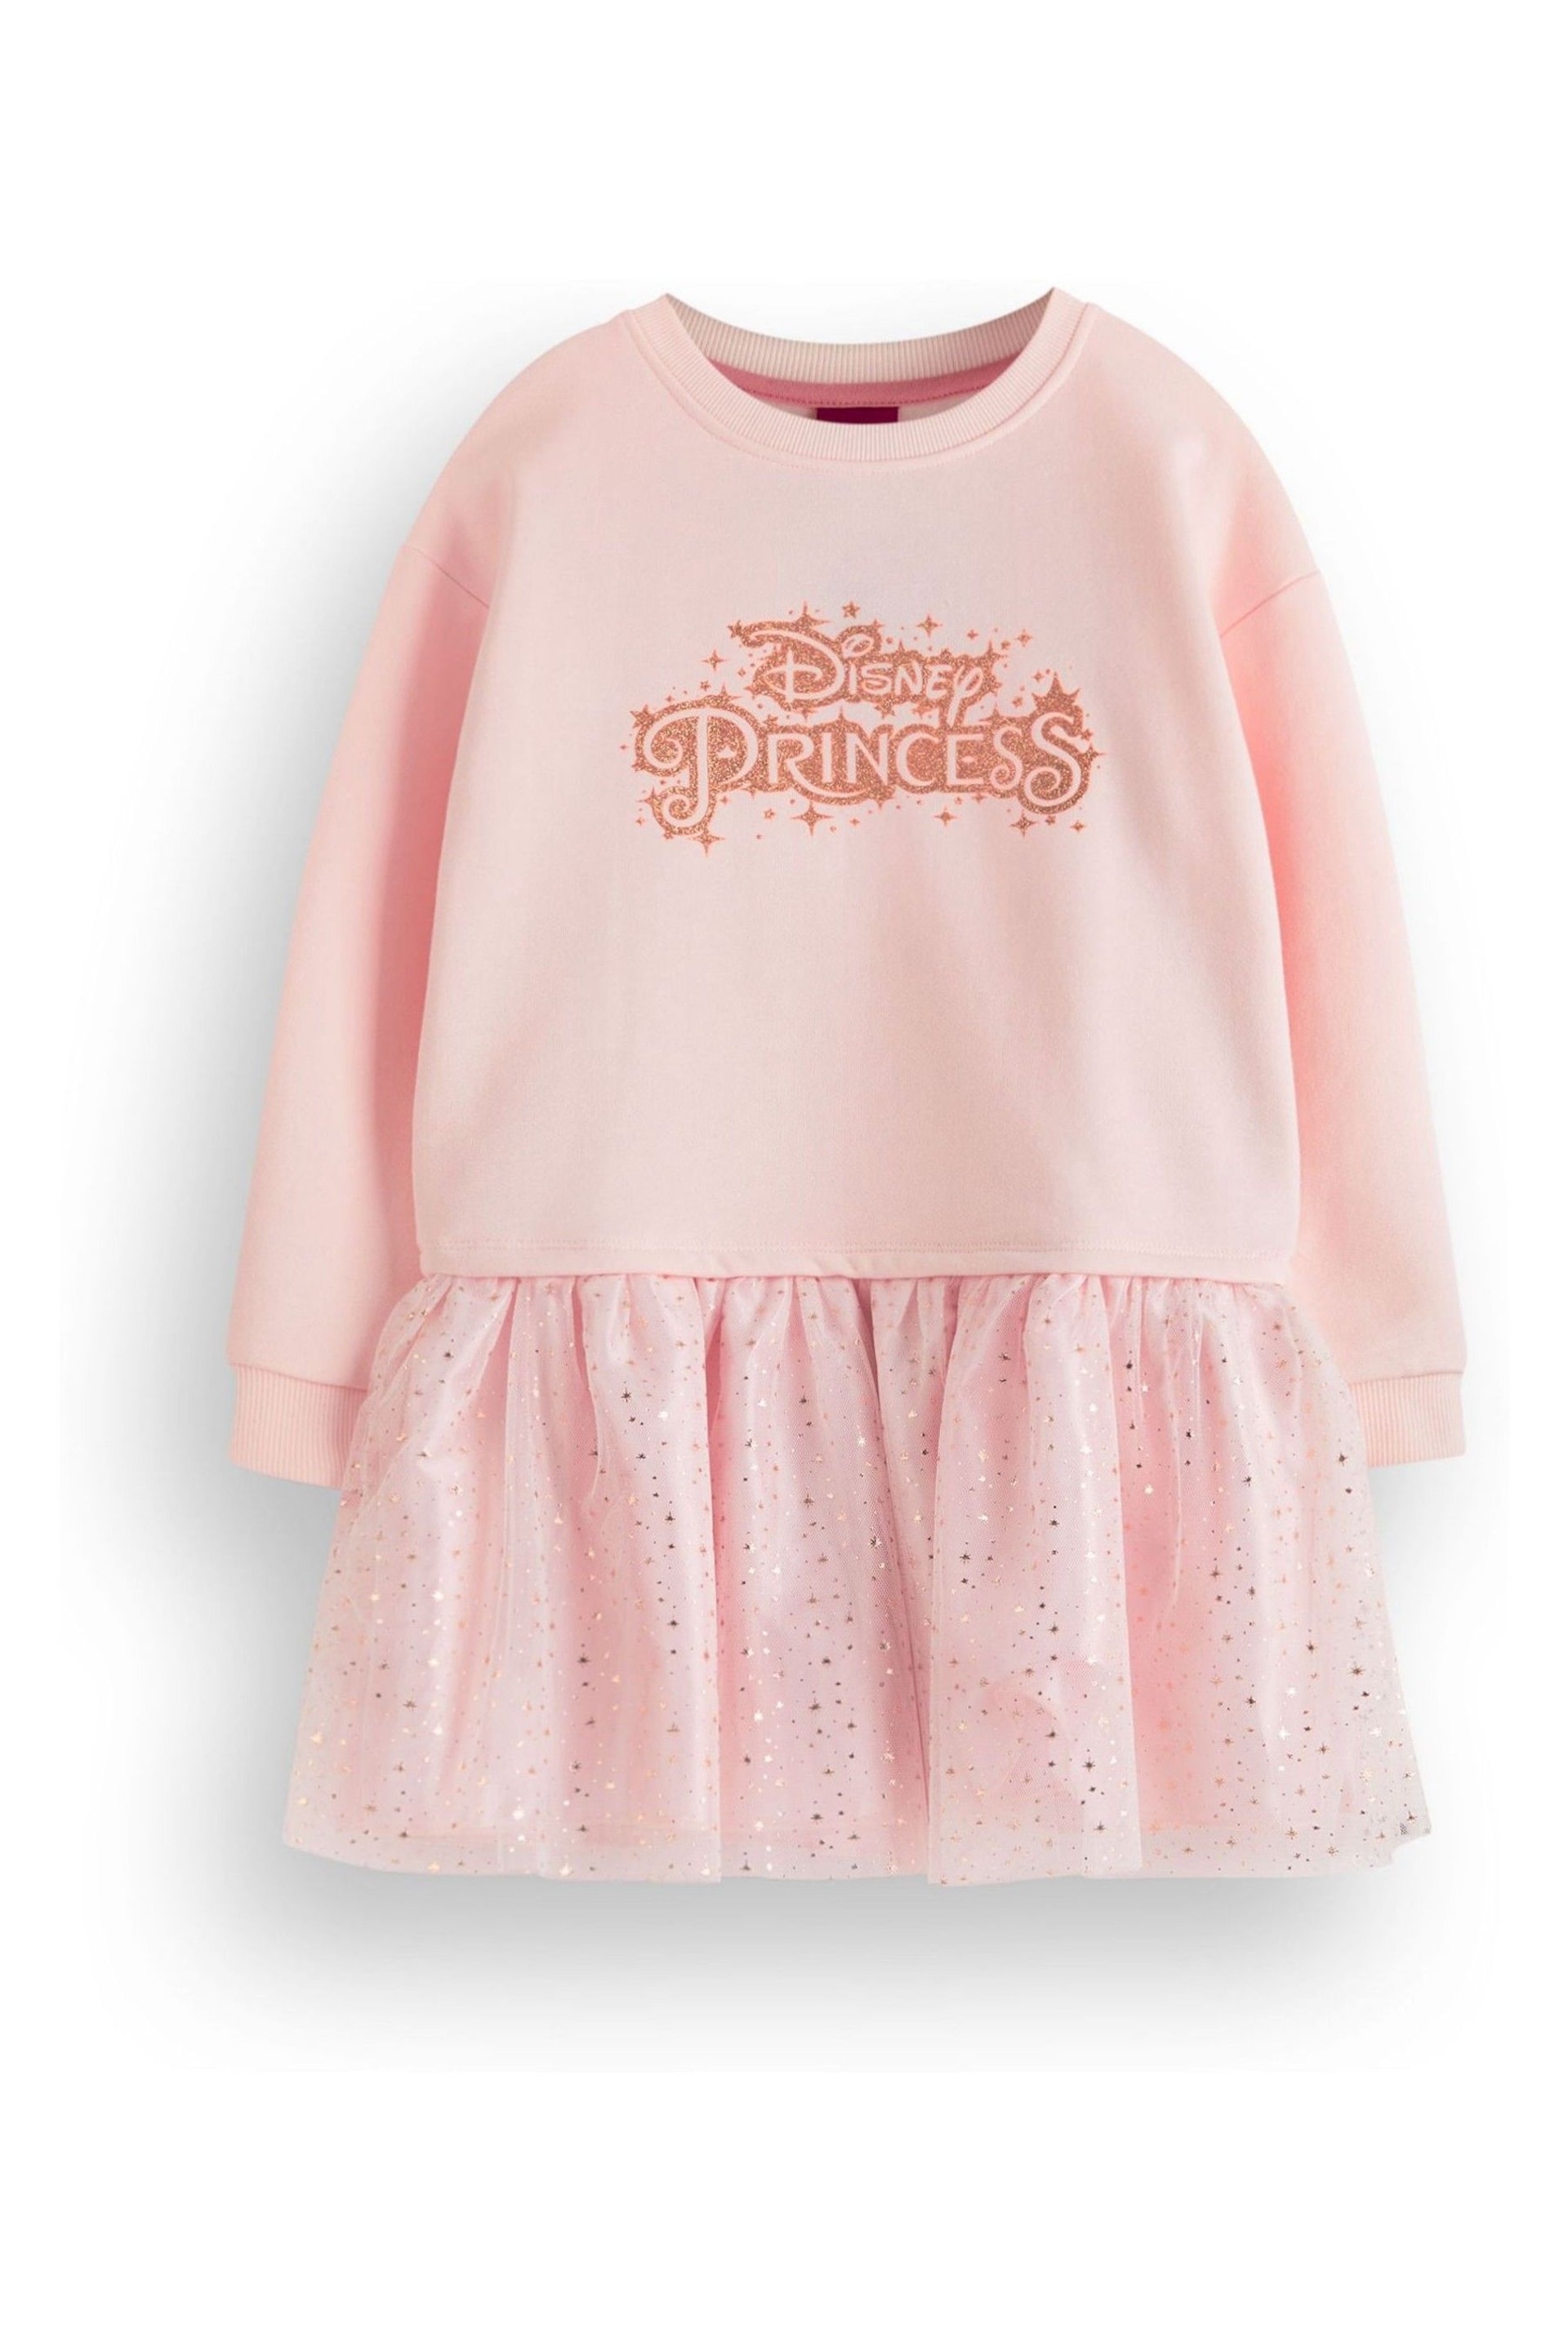 Vanilla Underground Pink Girls Disney Princess Longline Sweatshirt with Trim - Image 1 of 5